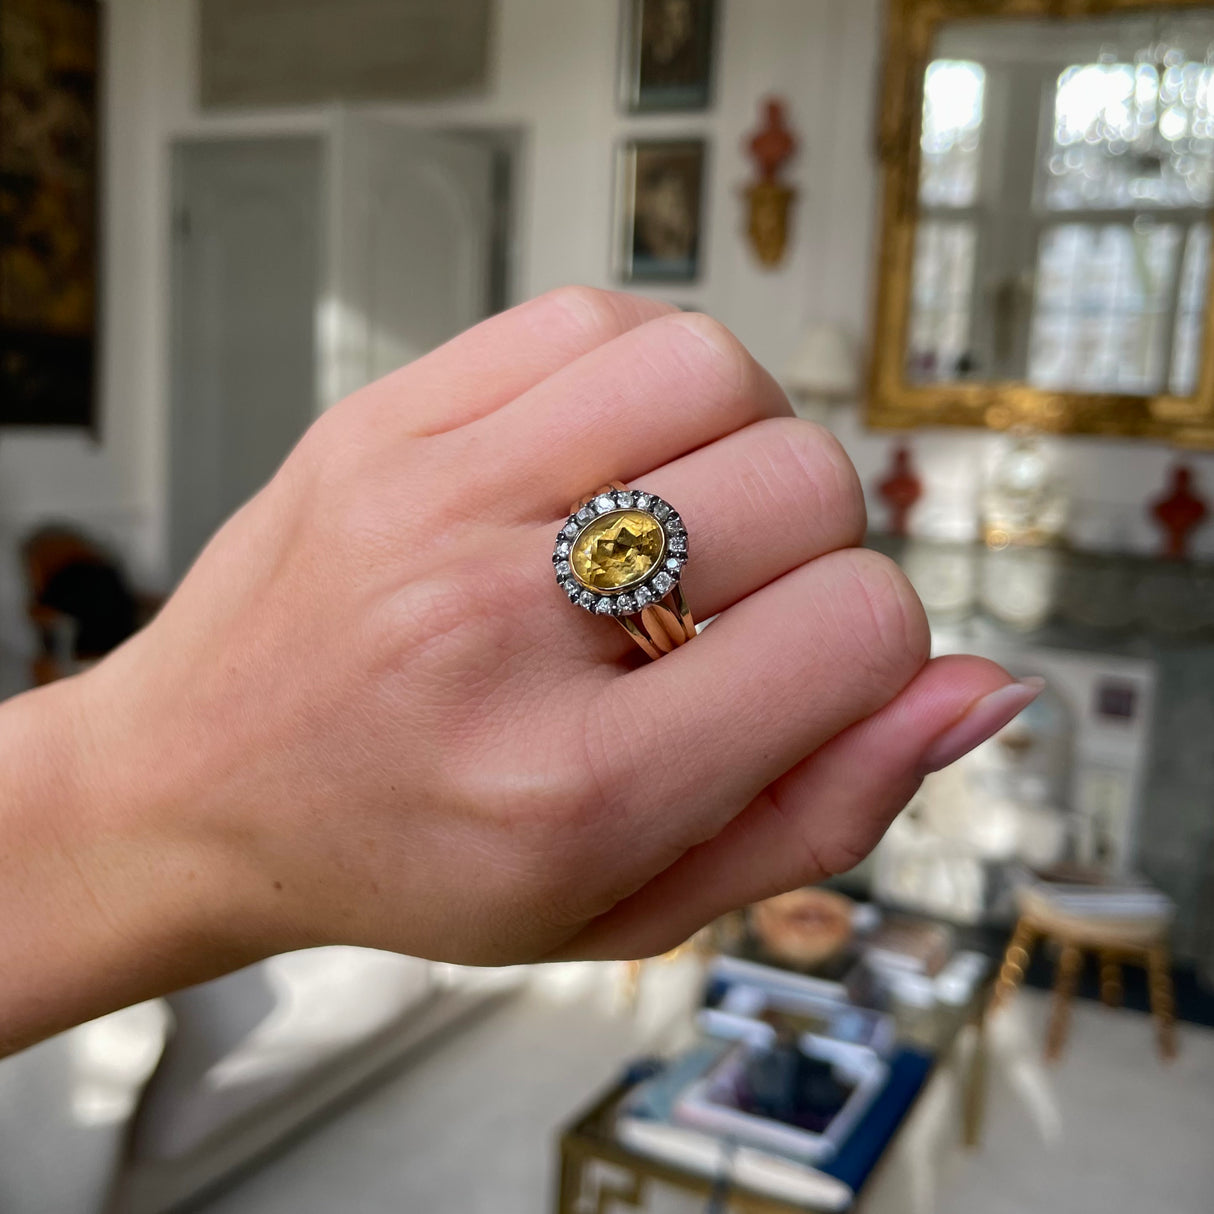 Antique Georgian citrine and diamond cluster ring, worn on hand.